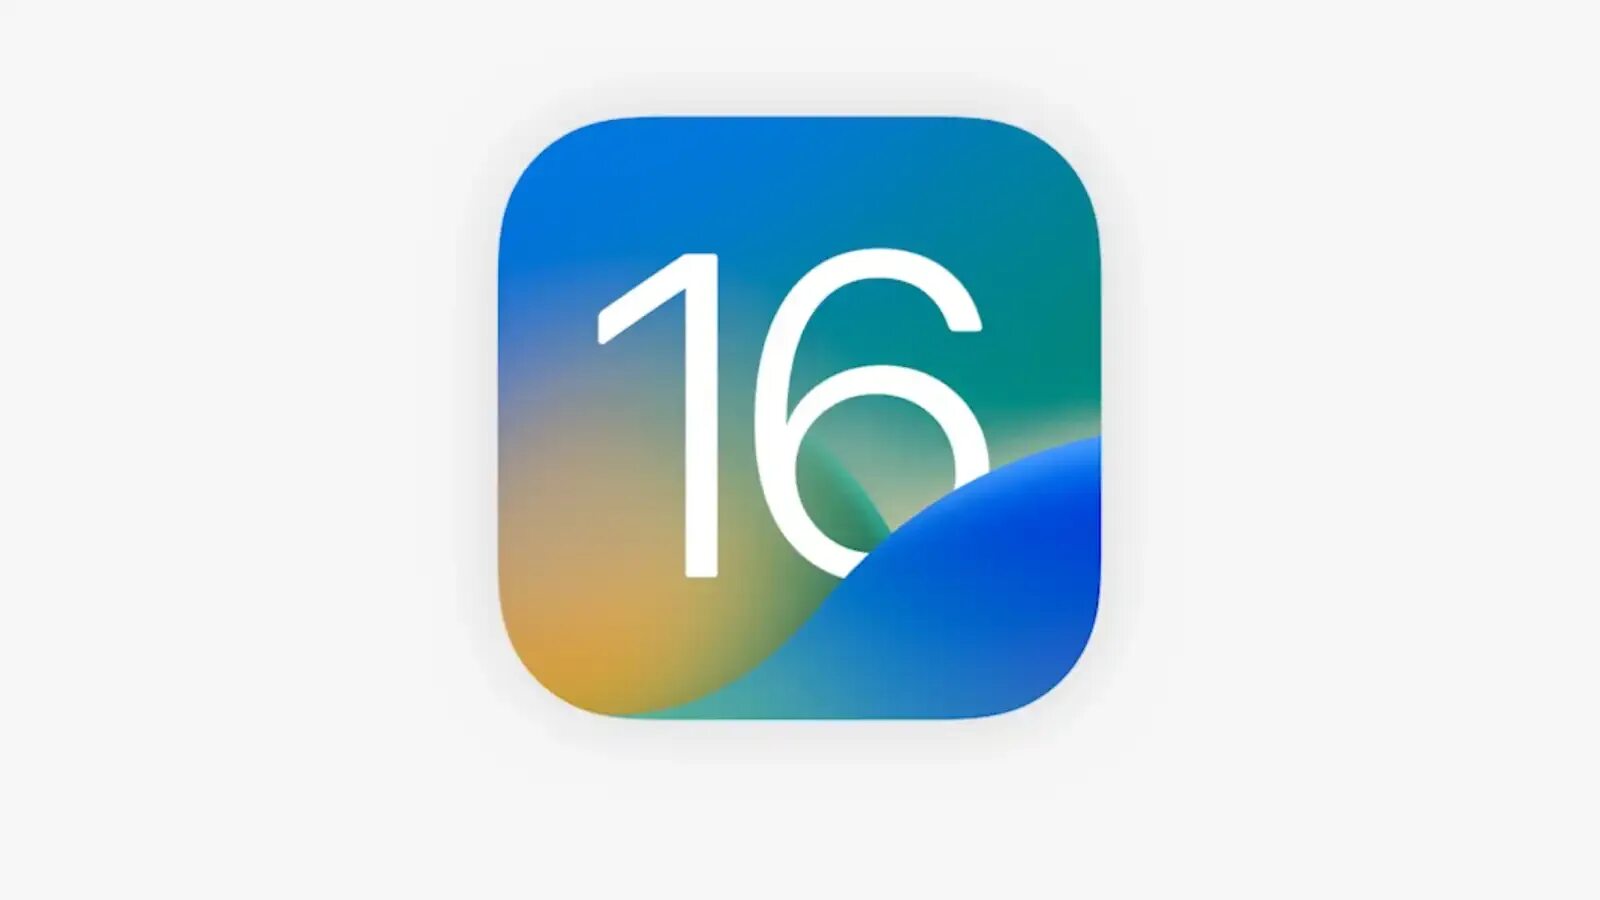 IOS логотип. IOS 16. Иконки IOS 16. Apple IOS.